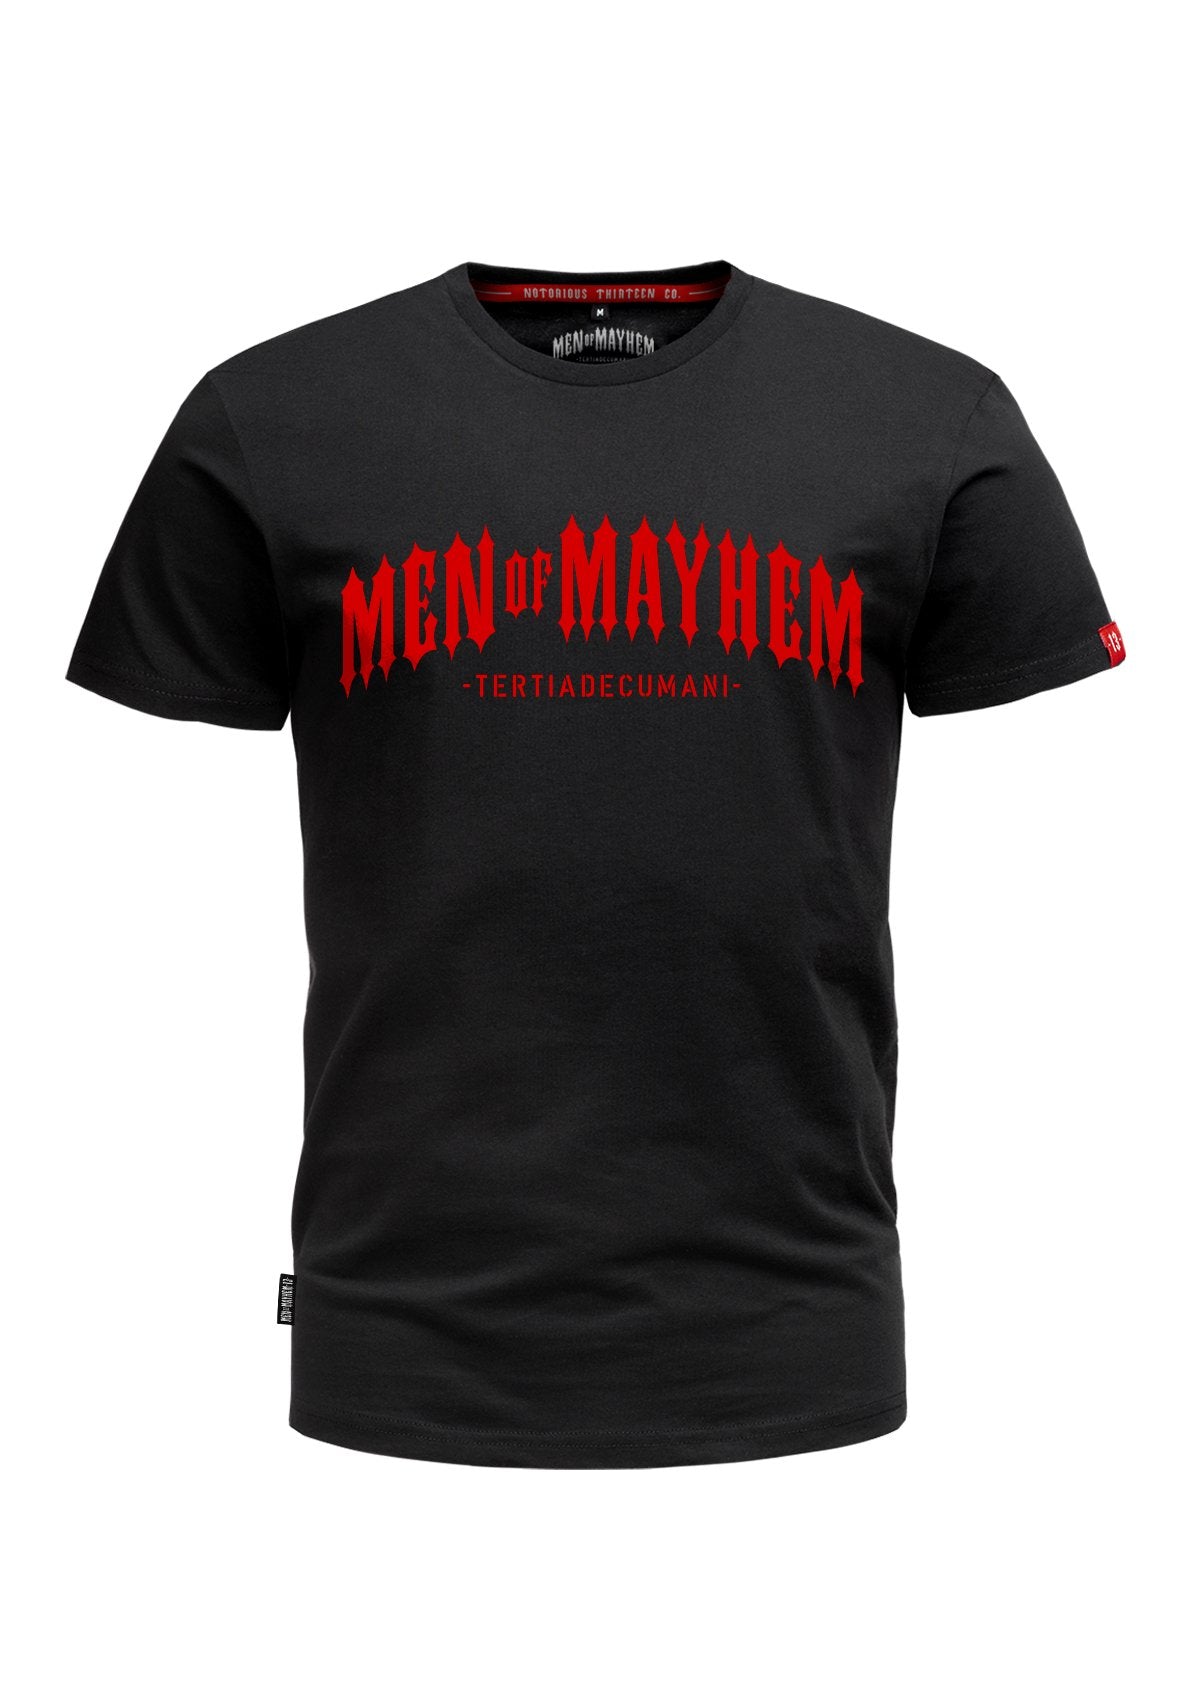 T-Shirt Mayhem Classic S/R - MEN OF MAYHEM - ALAIKO-EXCHANGES-MM-M-1010-MC-SR - black - Classic